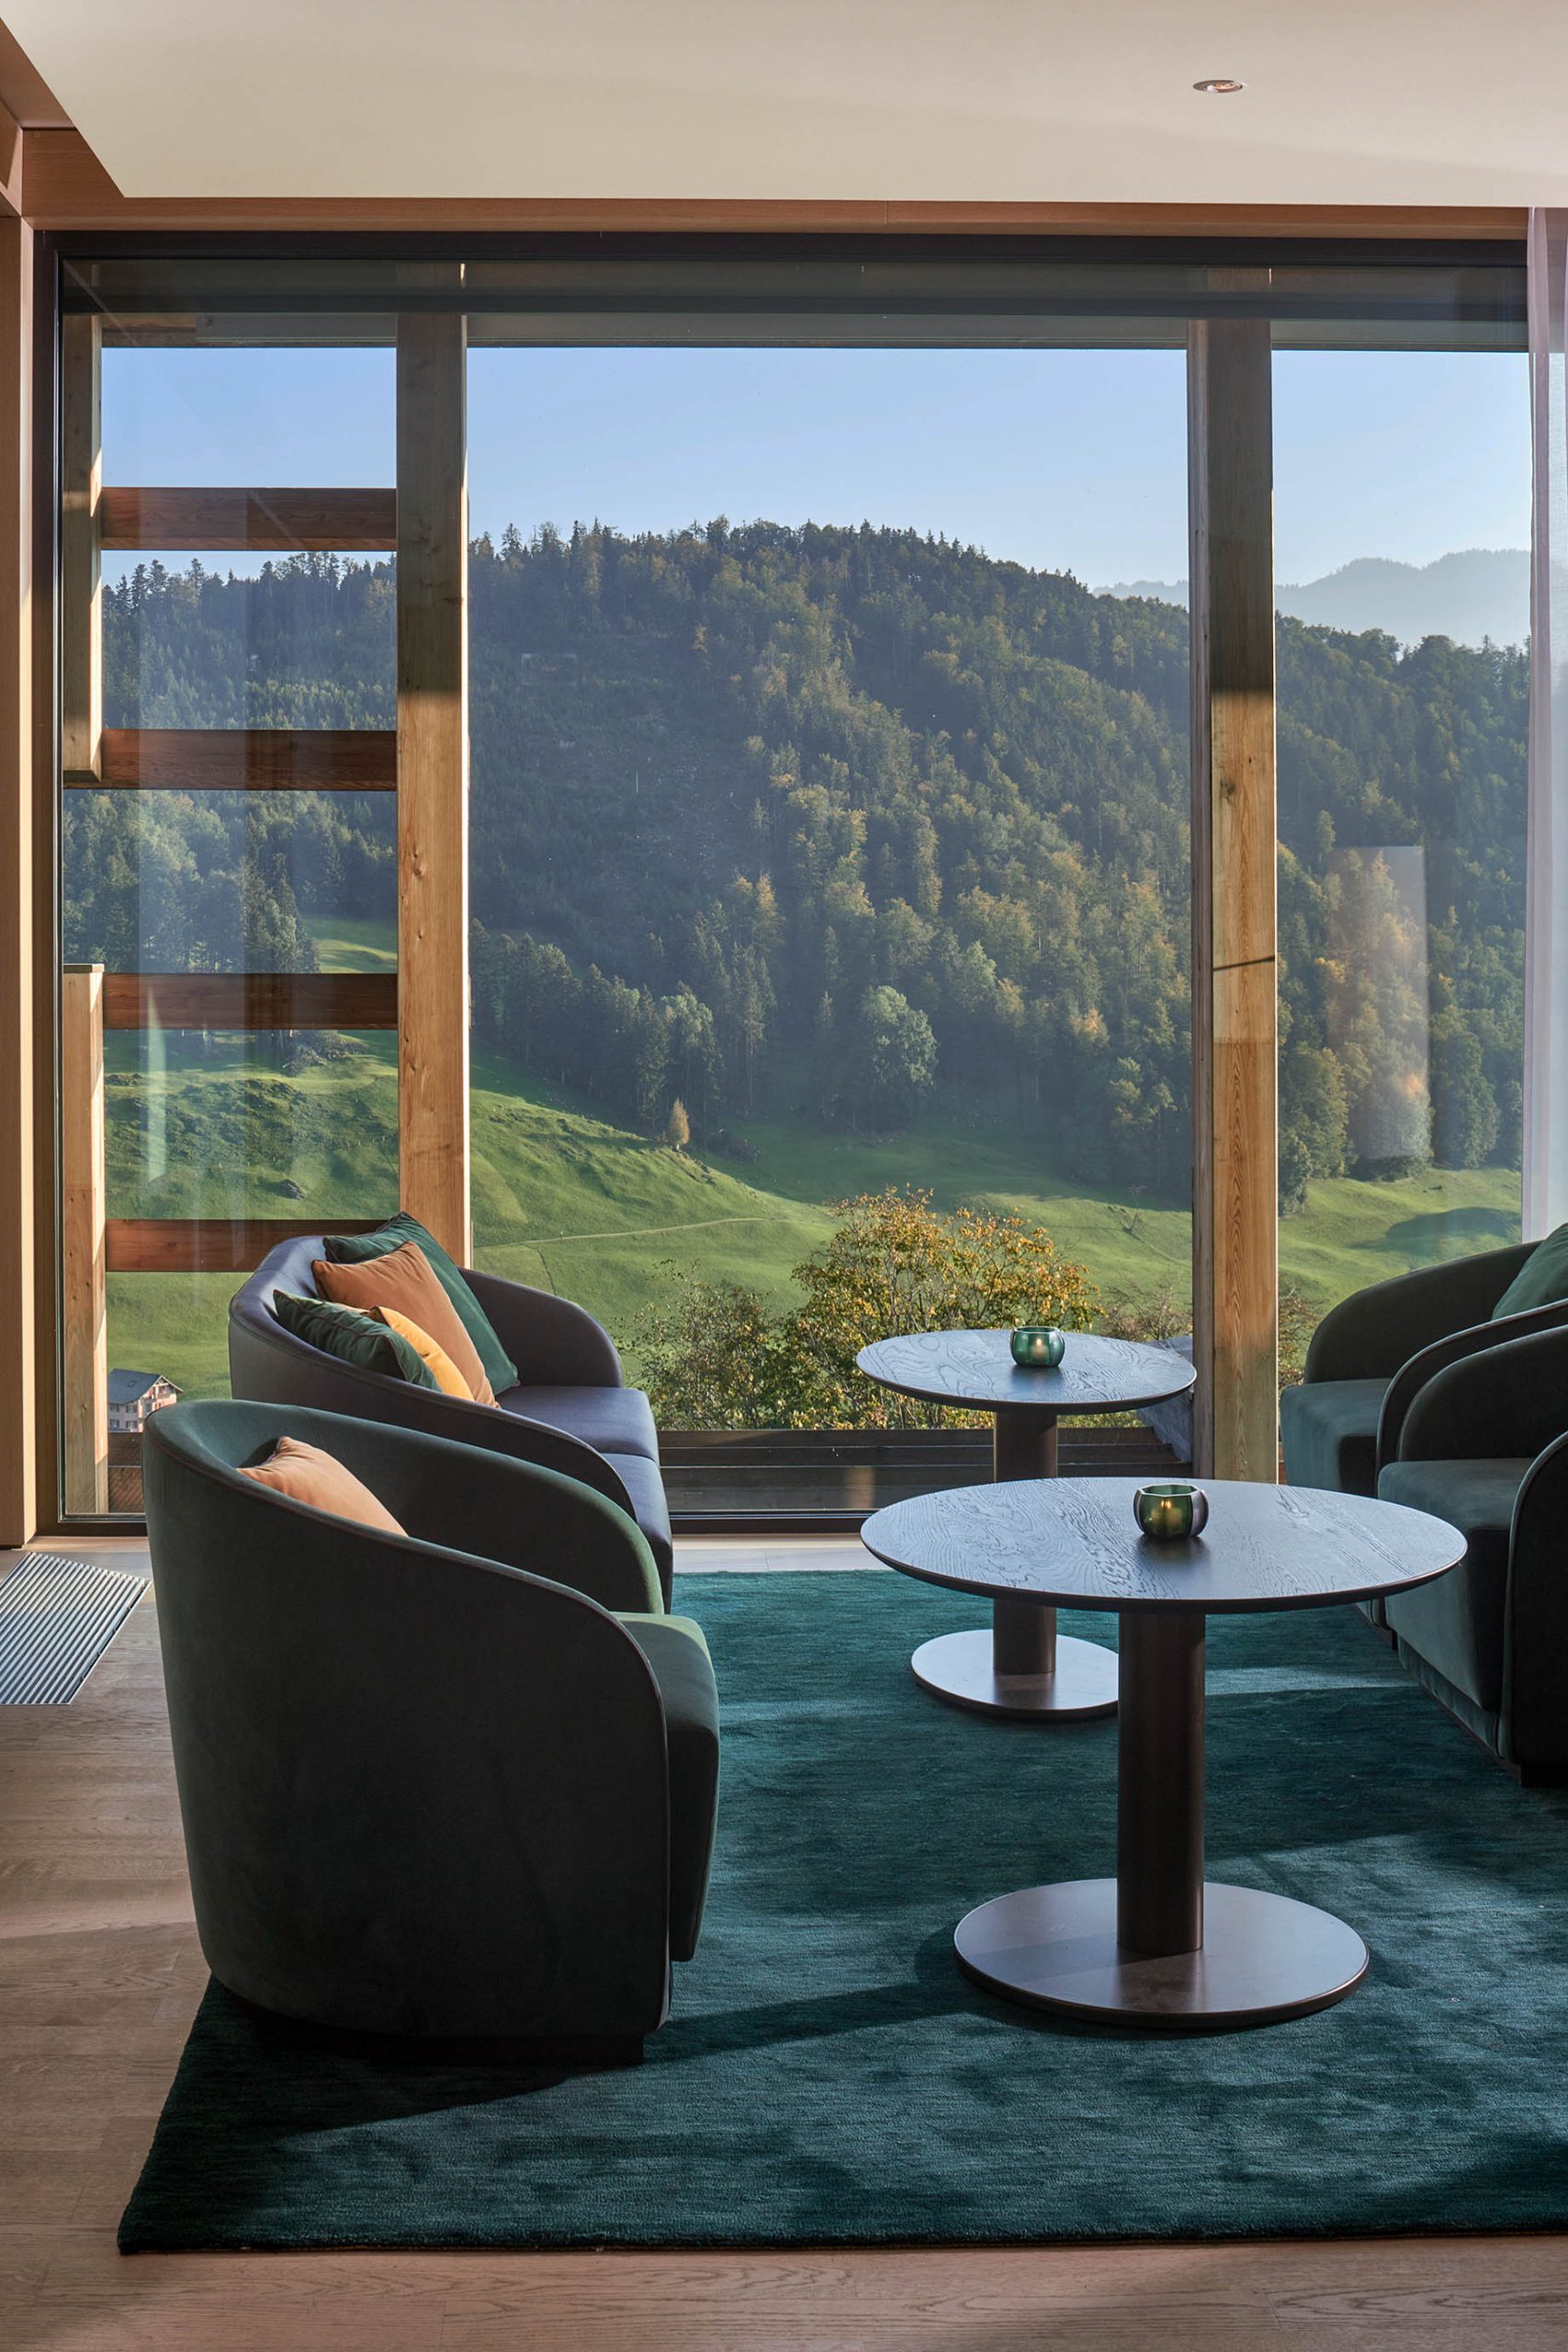 Burgenstock Hotel & Alpine Spa - Obburgen, Switzerland - Verbena Restaurant & Bar Interior